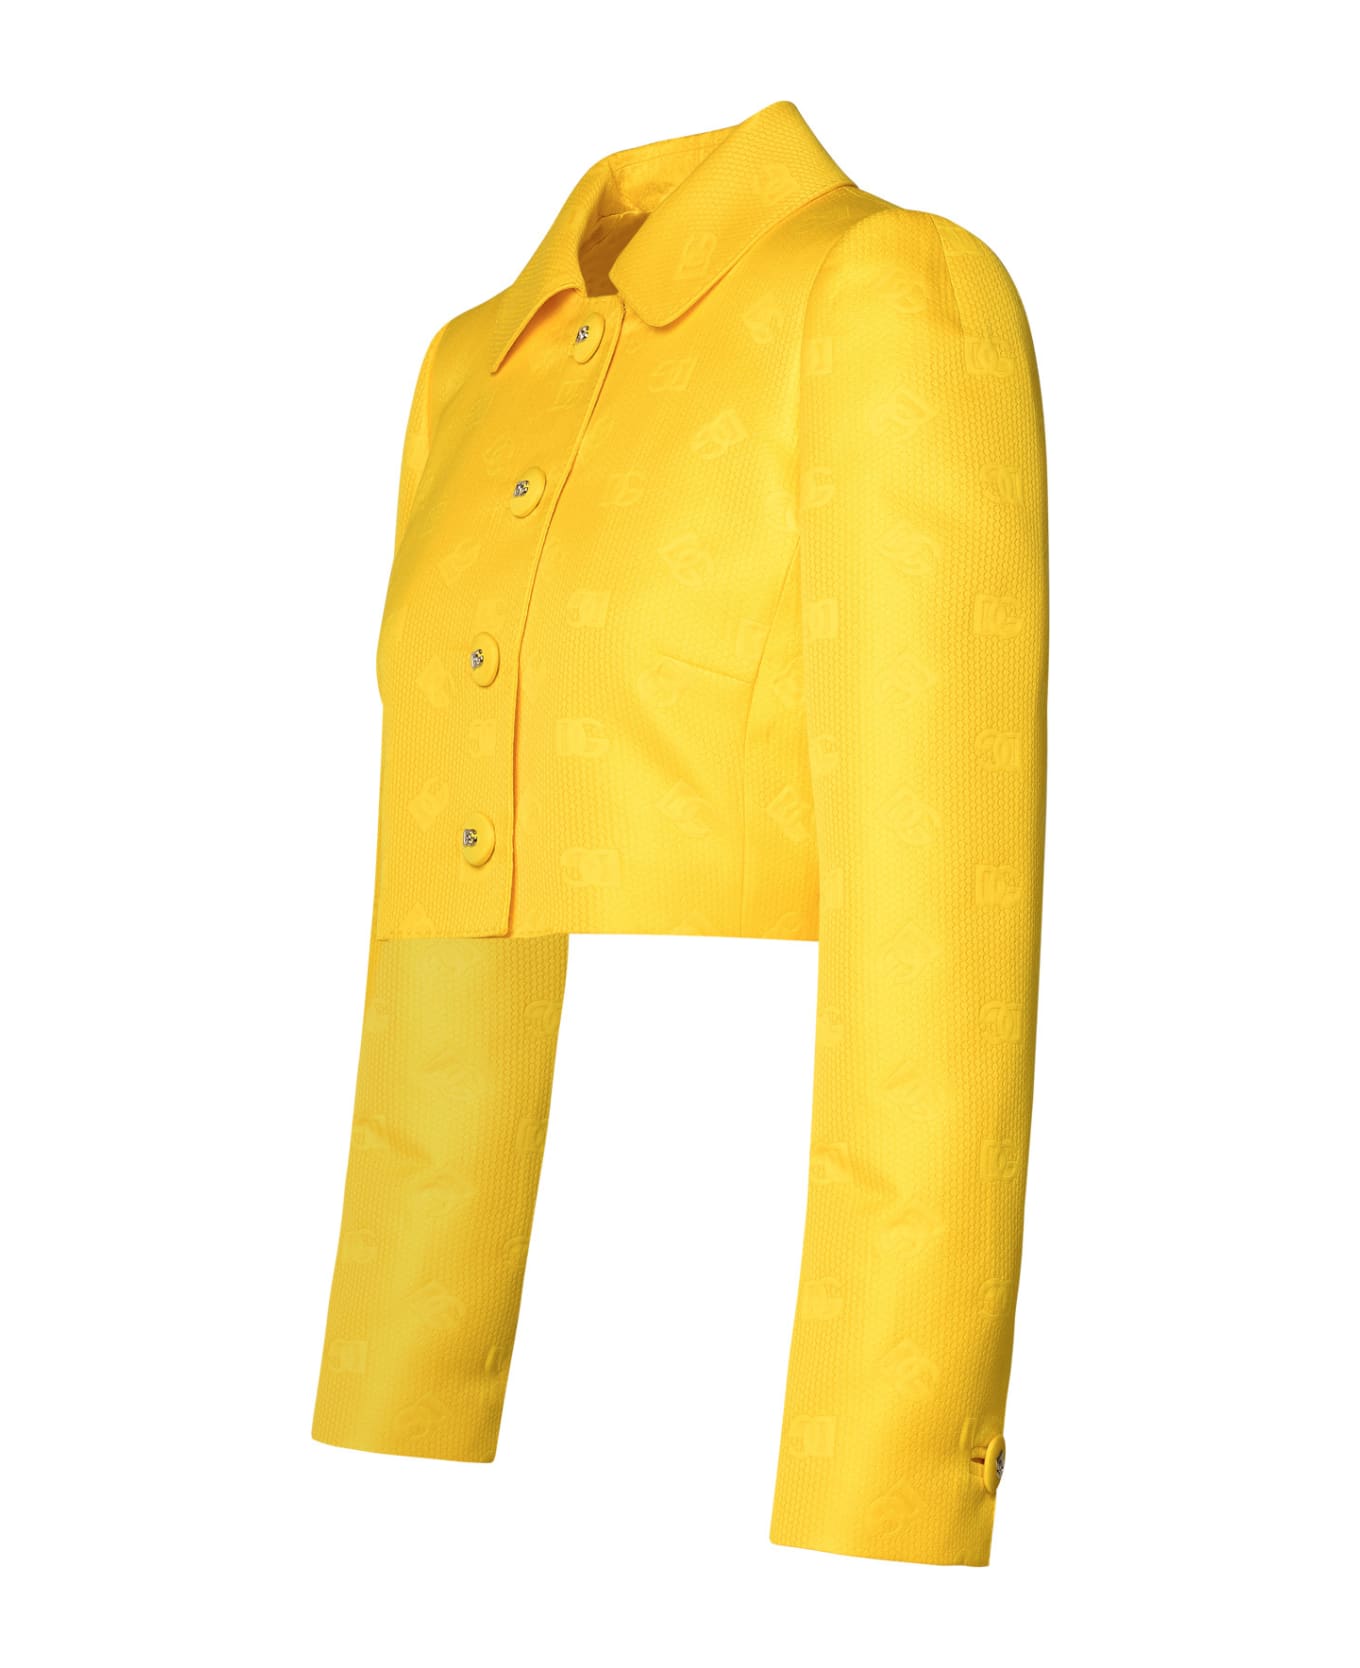 Dolce & Gabbana Yellow Cotton Blend Jacket - Yellow